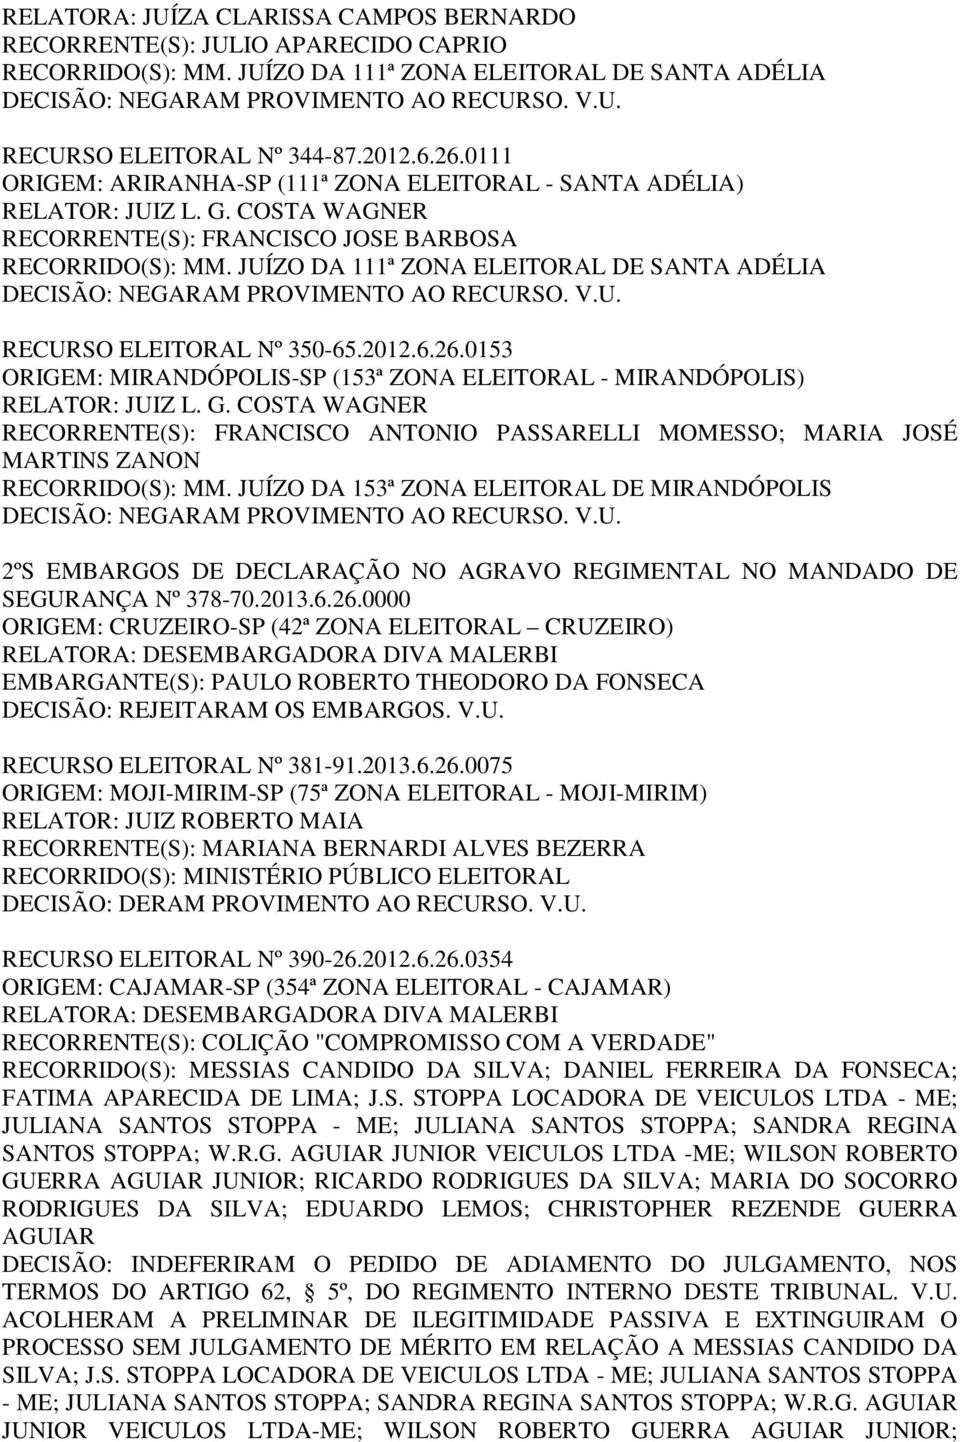 0153 ORIGEM: MIRANDÓPOLIS-SP (153ª ZONA ELEITORAL - MIRANDÓPOLIS) RECORRENTE(S): FRANCISCO ANTONIO PASSARELLI MOMESSO; MARIA JOSÉ MARTINS ZANON RECORRIDO(S): MM.